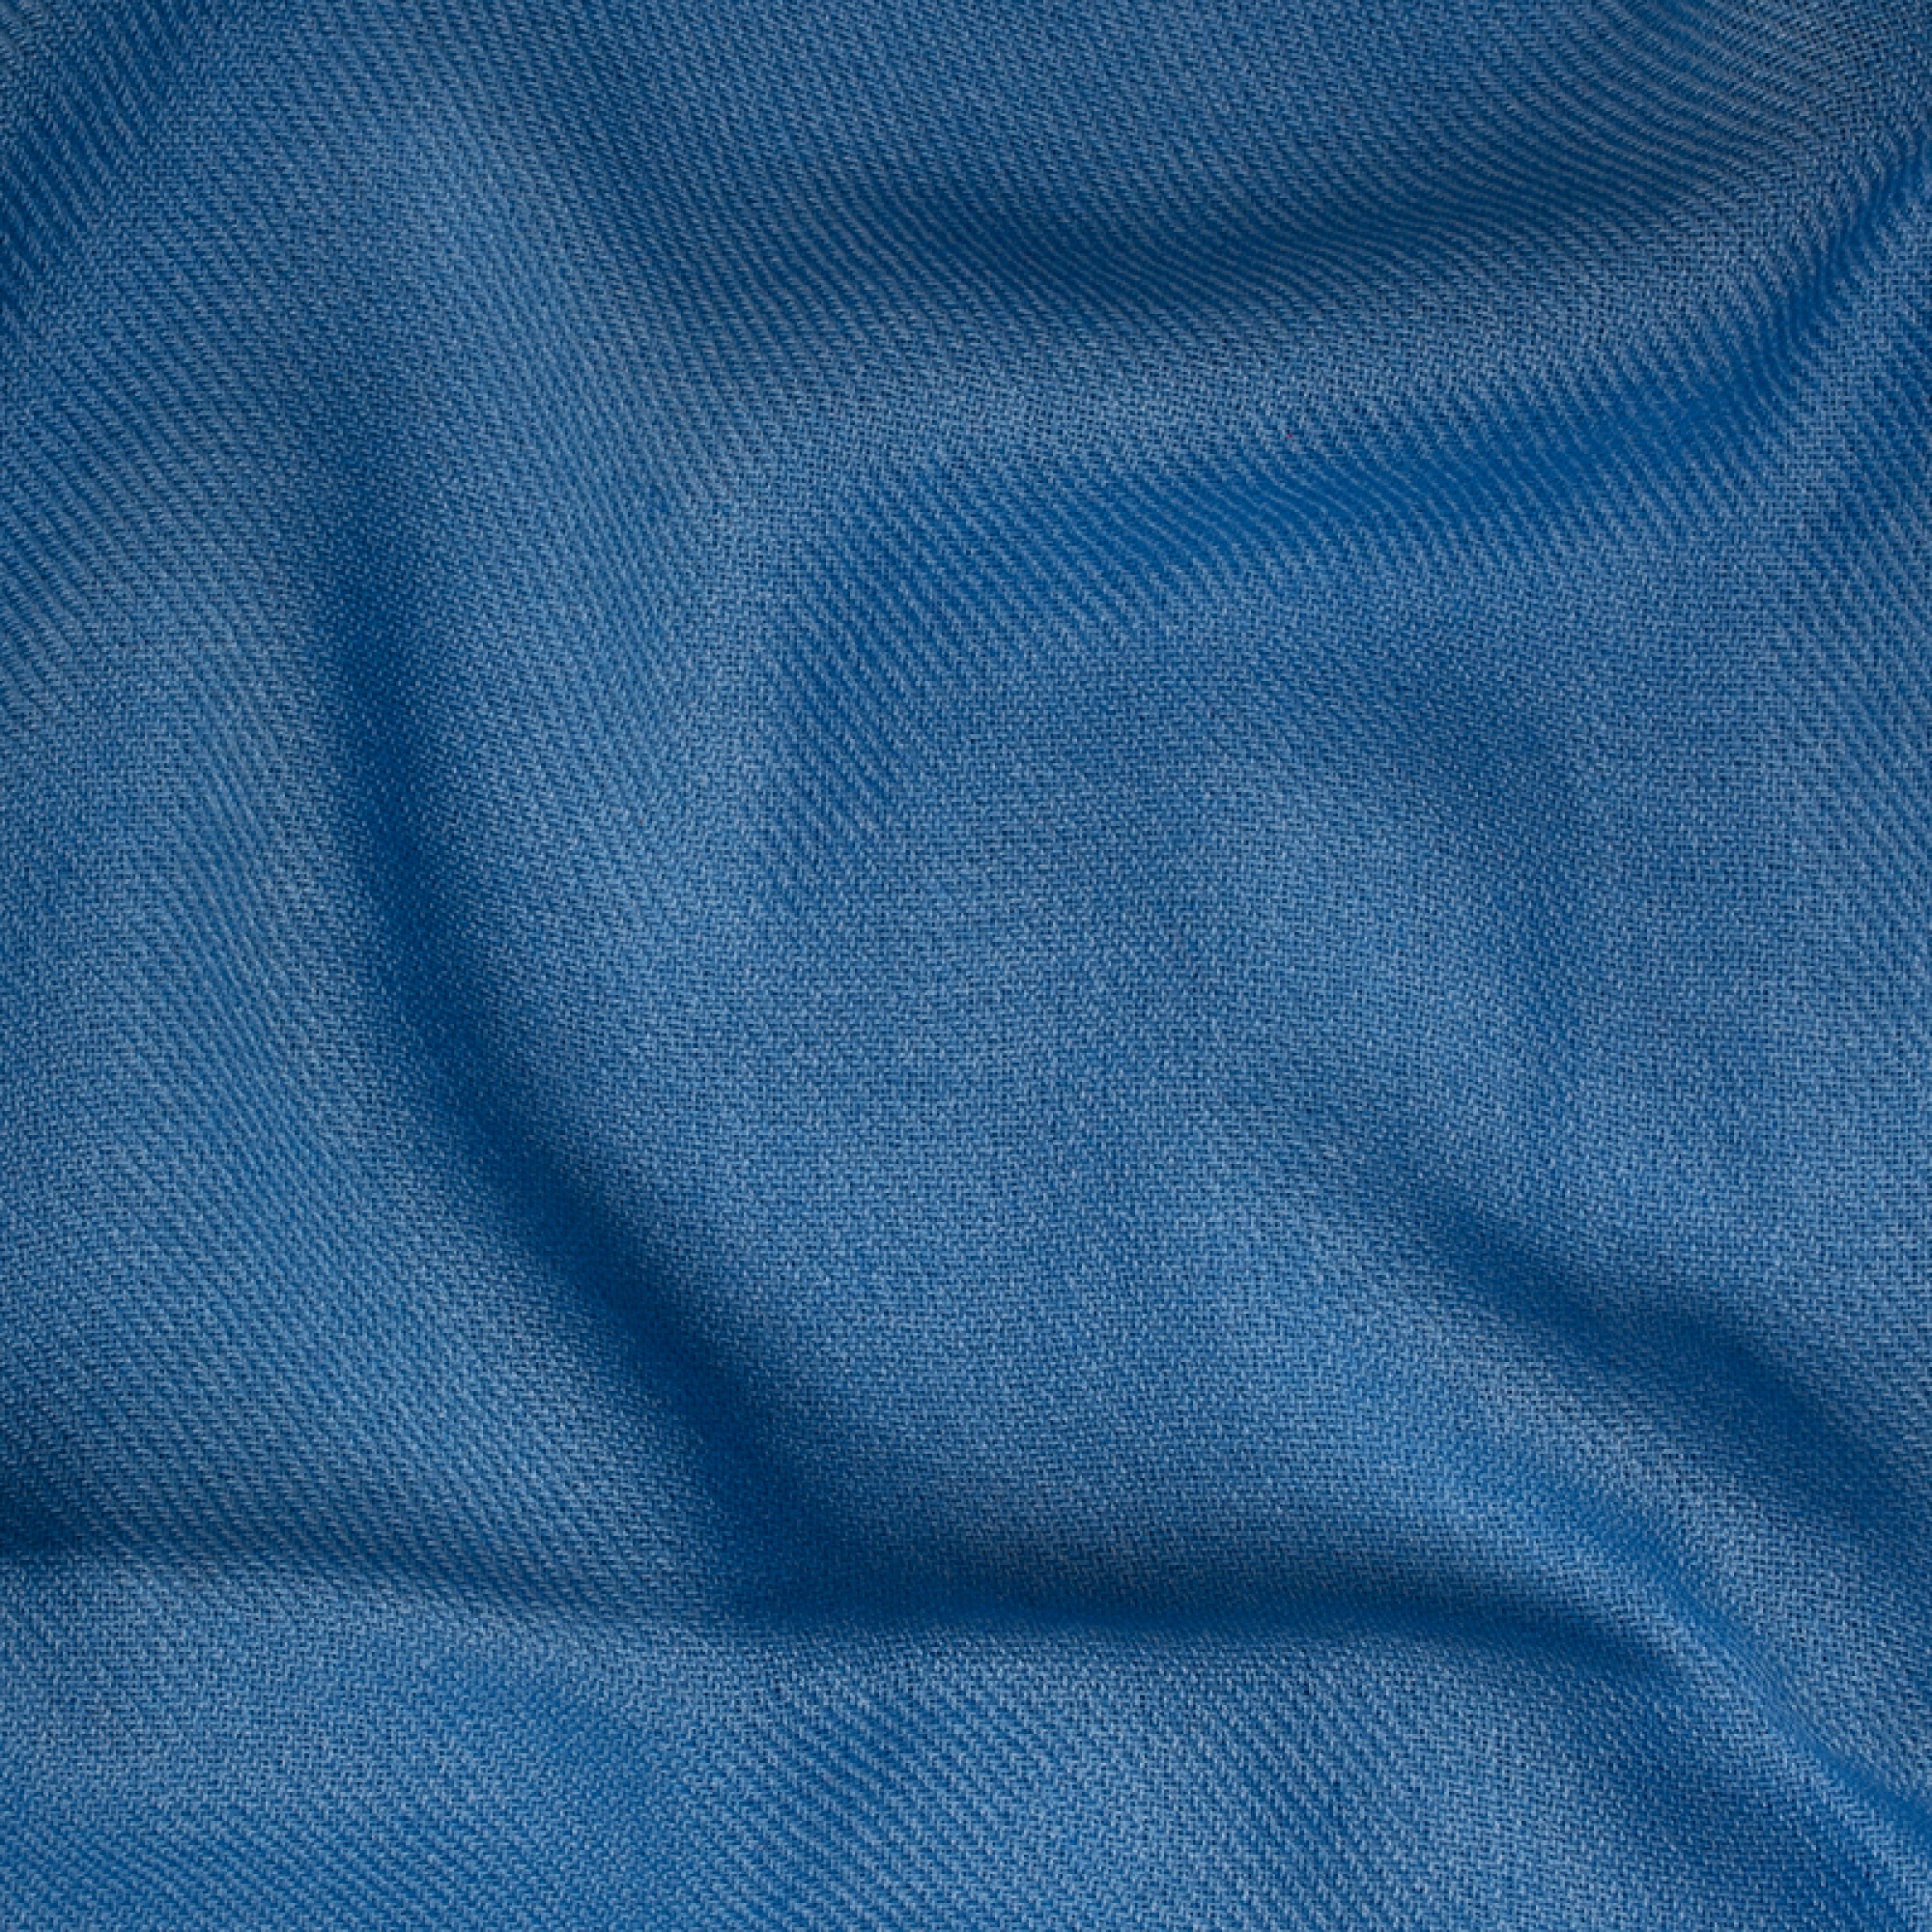 Cachemire pull femme etoles chales niry bleu miro 200x90cm